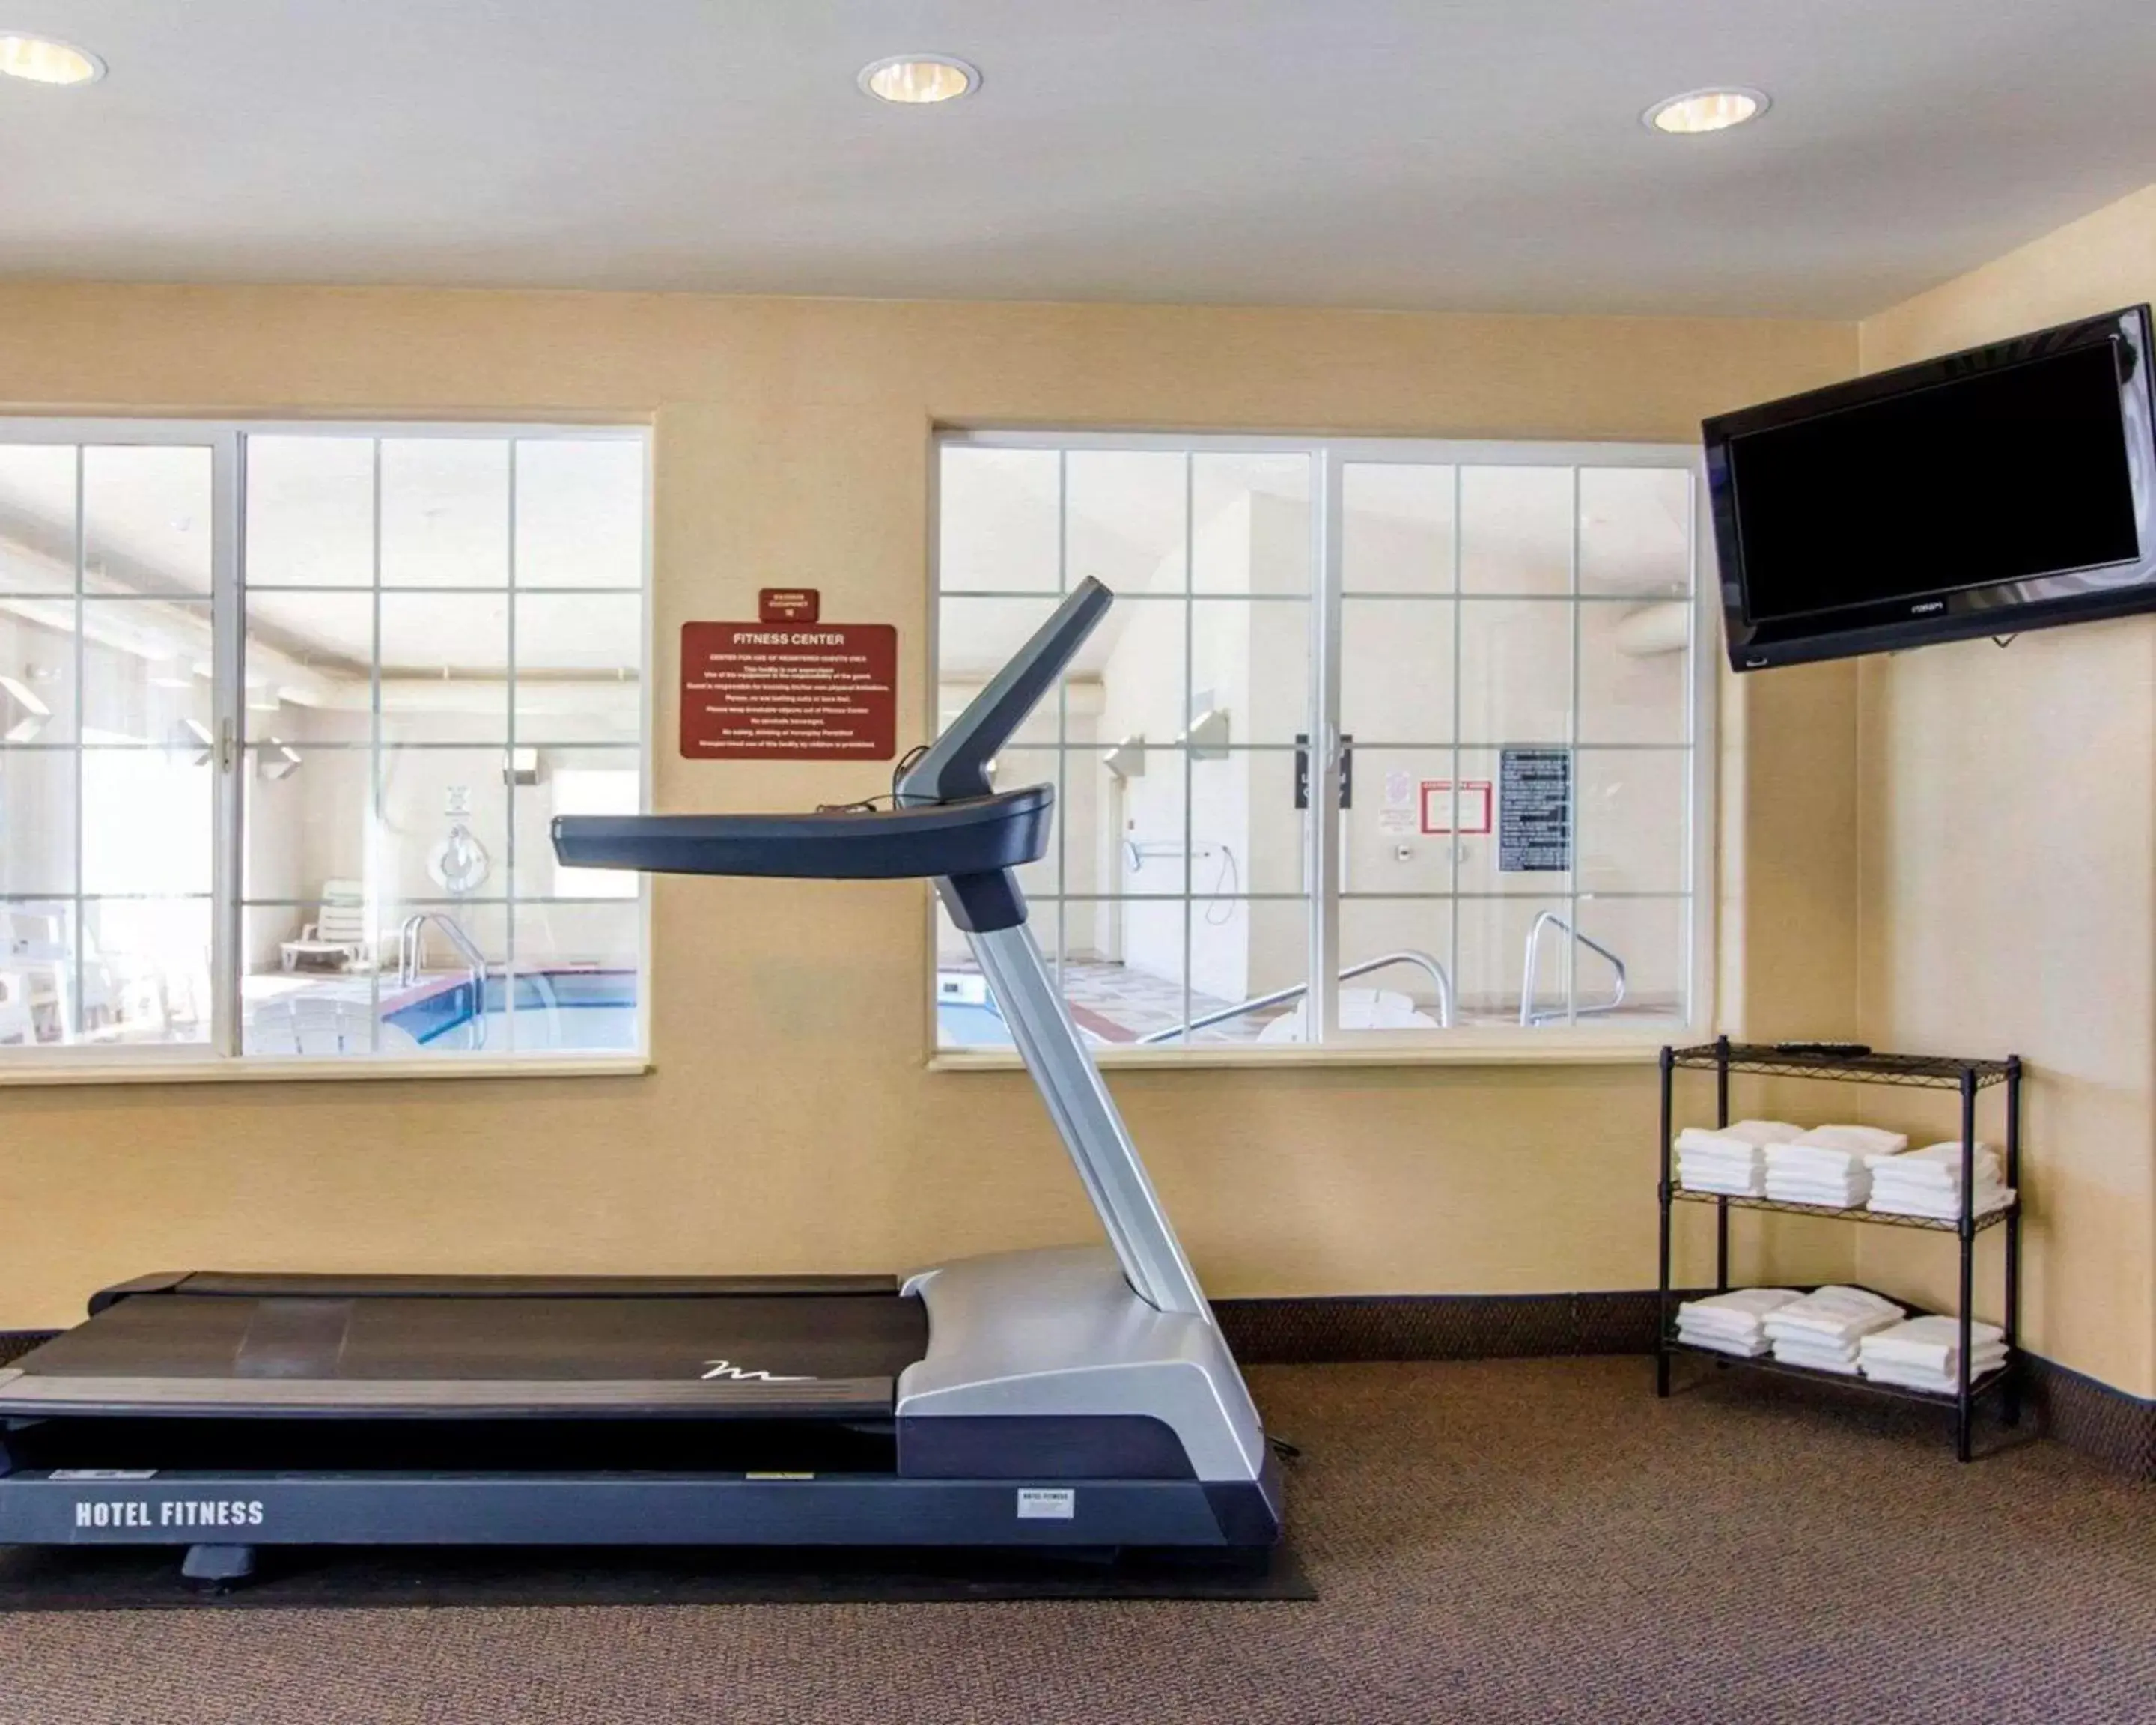 Fitness centre/facilities, Fitness Center/Facilities in Sleep Inn & Suites Evansville